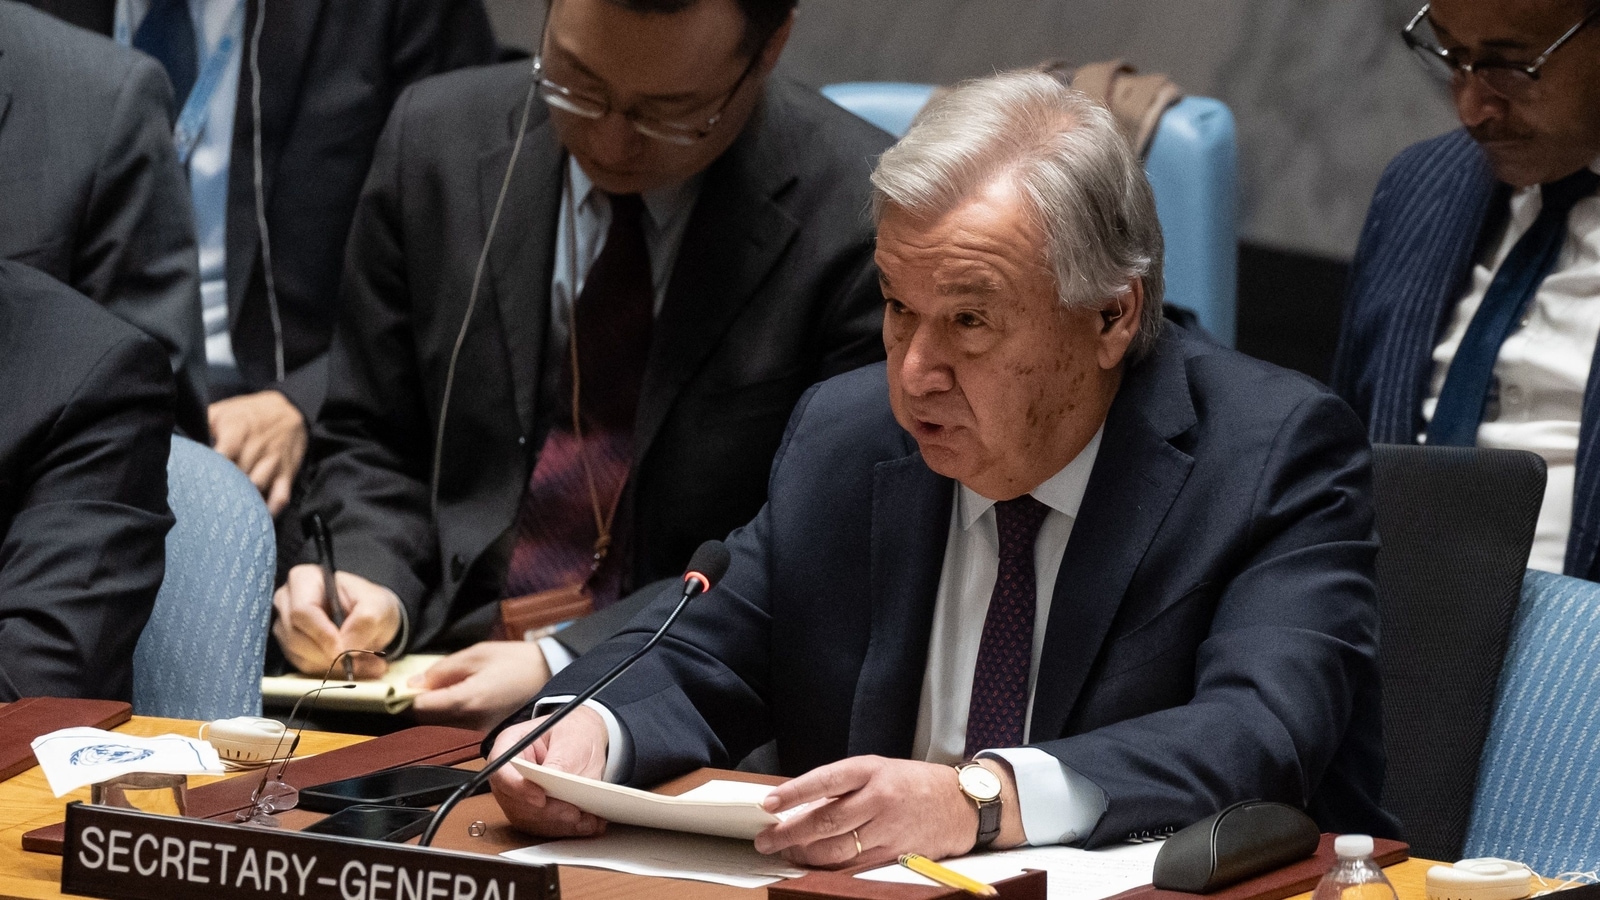 ‘Time to defuse and de-escalate’: UN chief condemns Iran's attack on Israel